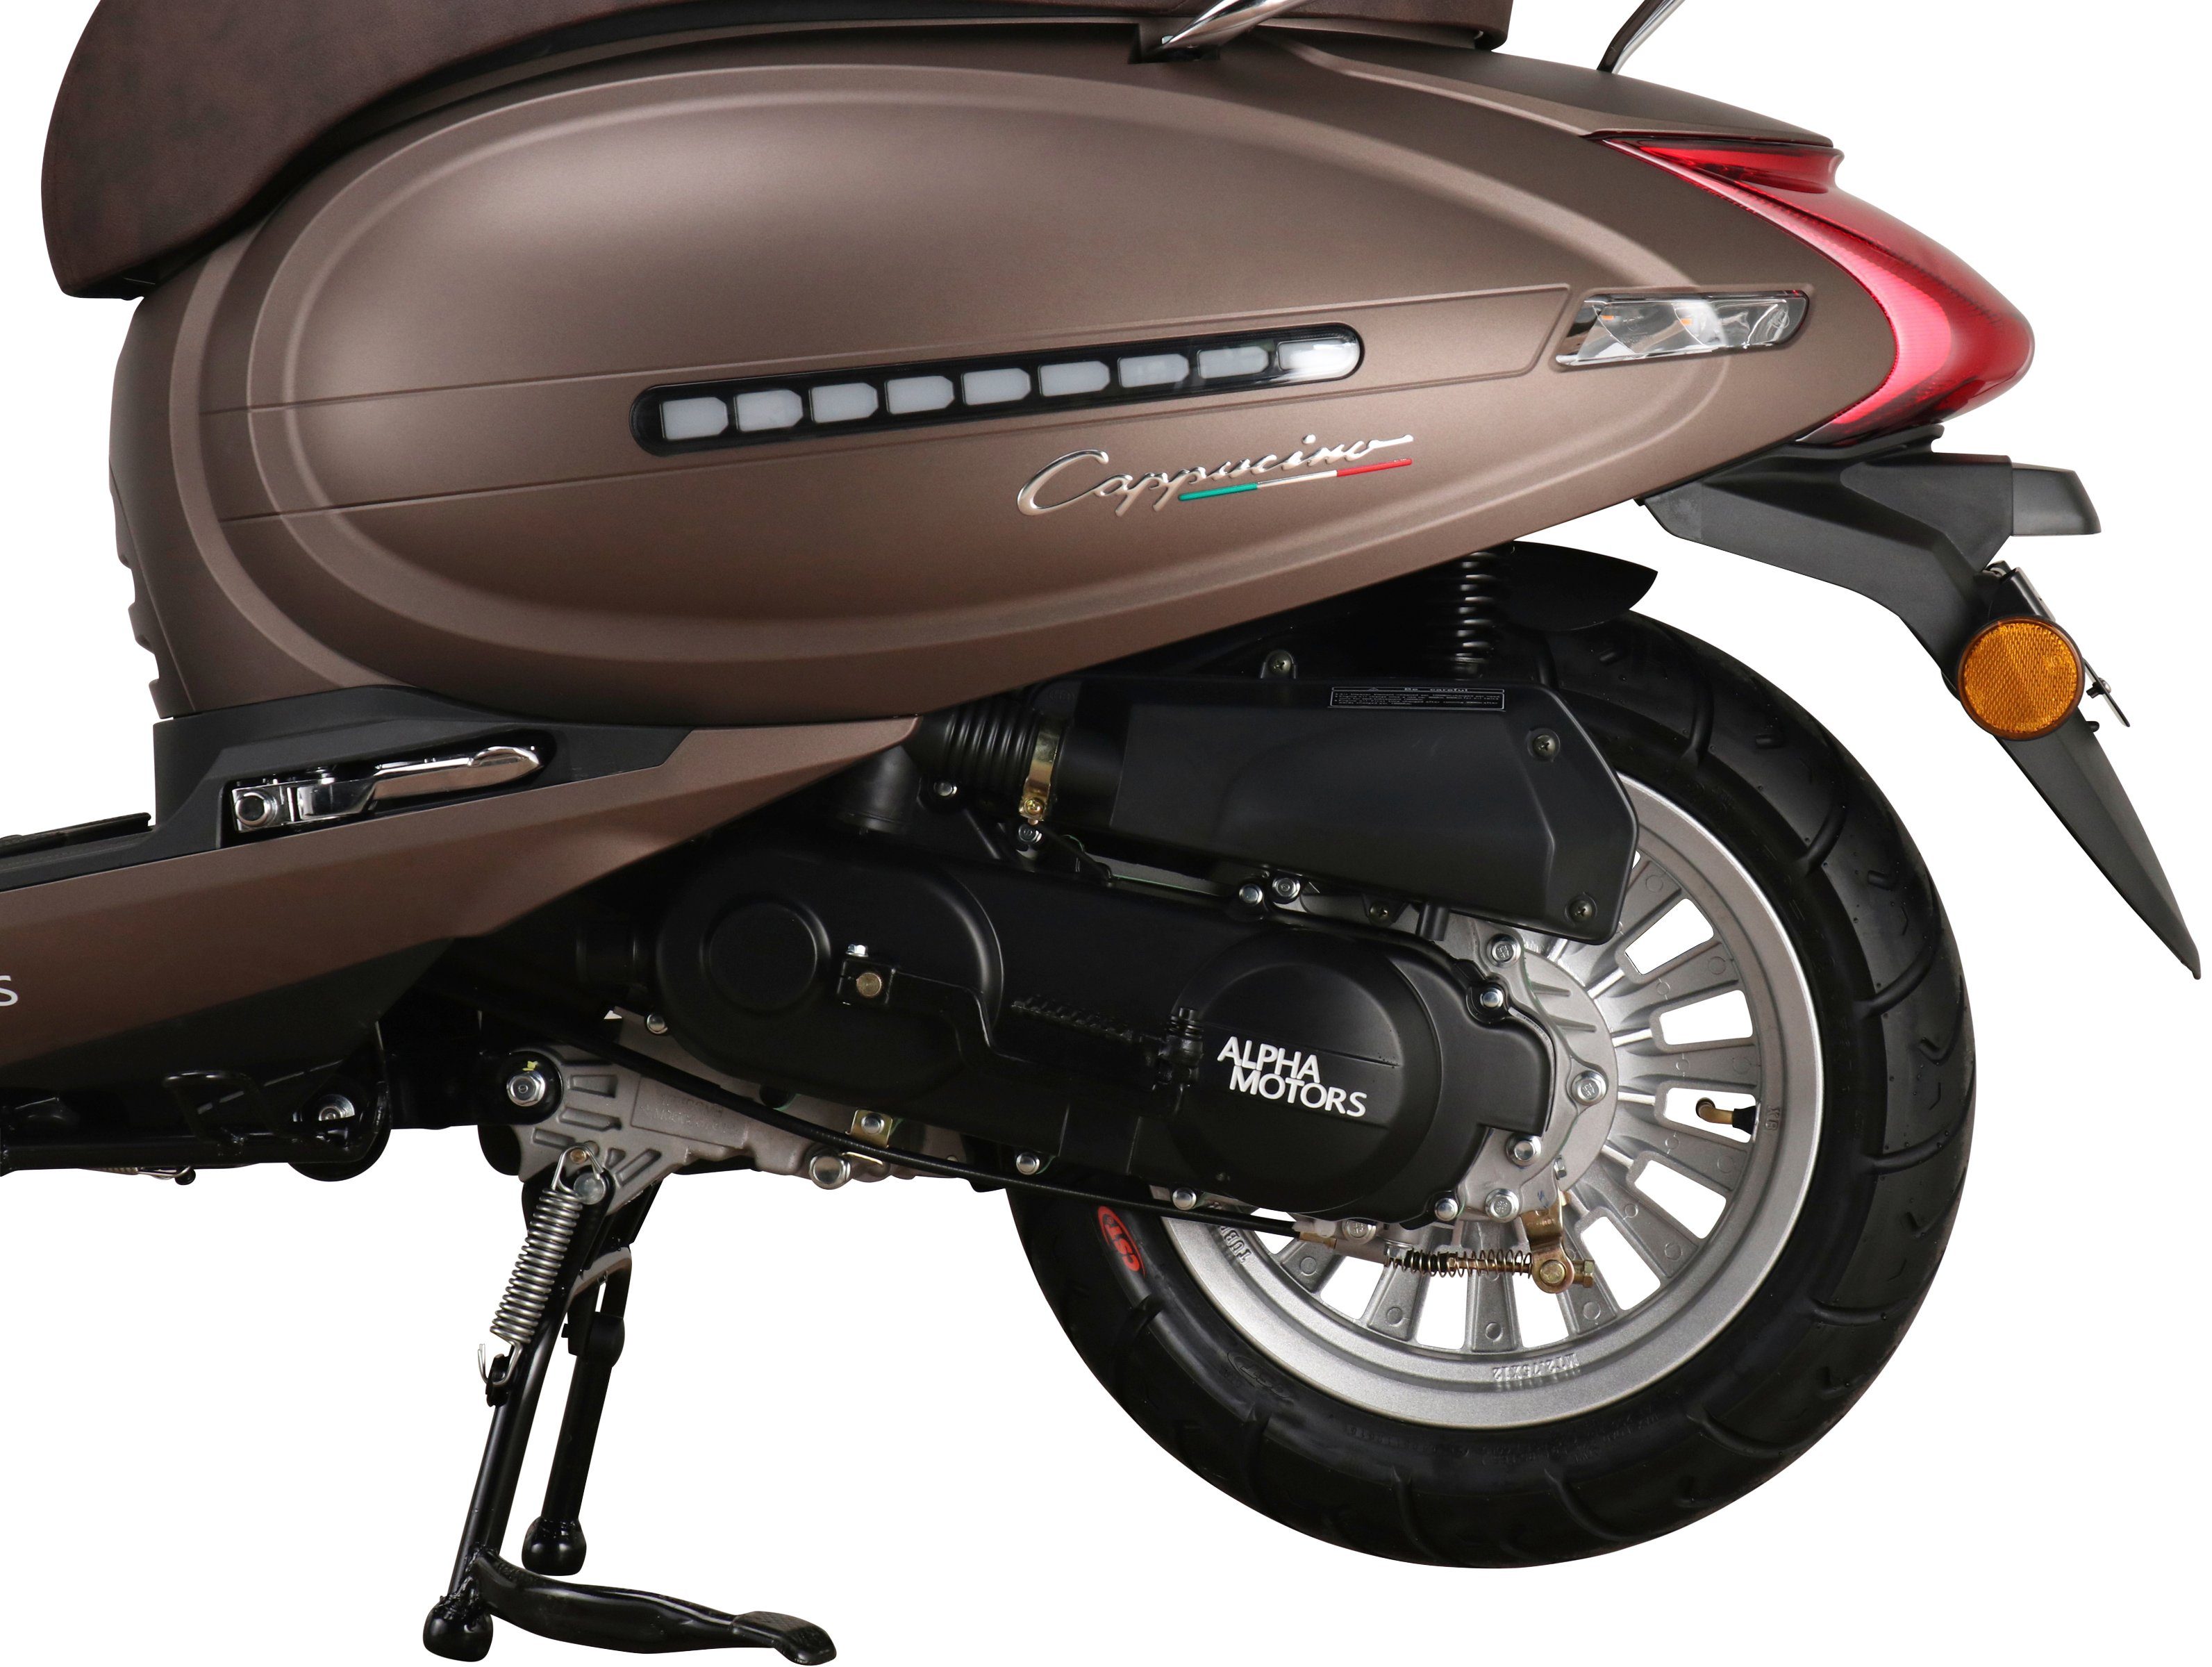 Alpha Motors Motorroller Cappucino, Euro ccm, 50 km/h, 5 45